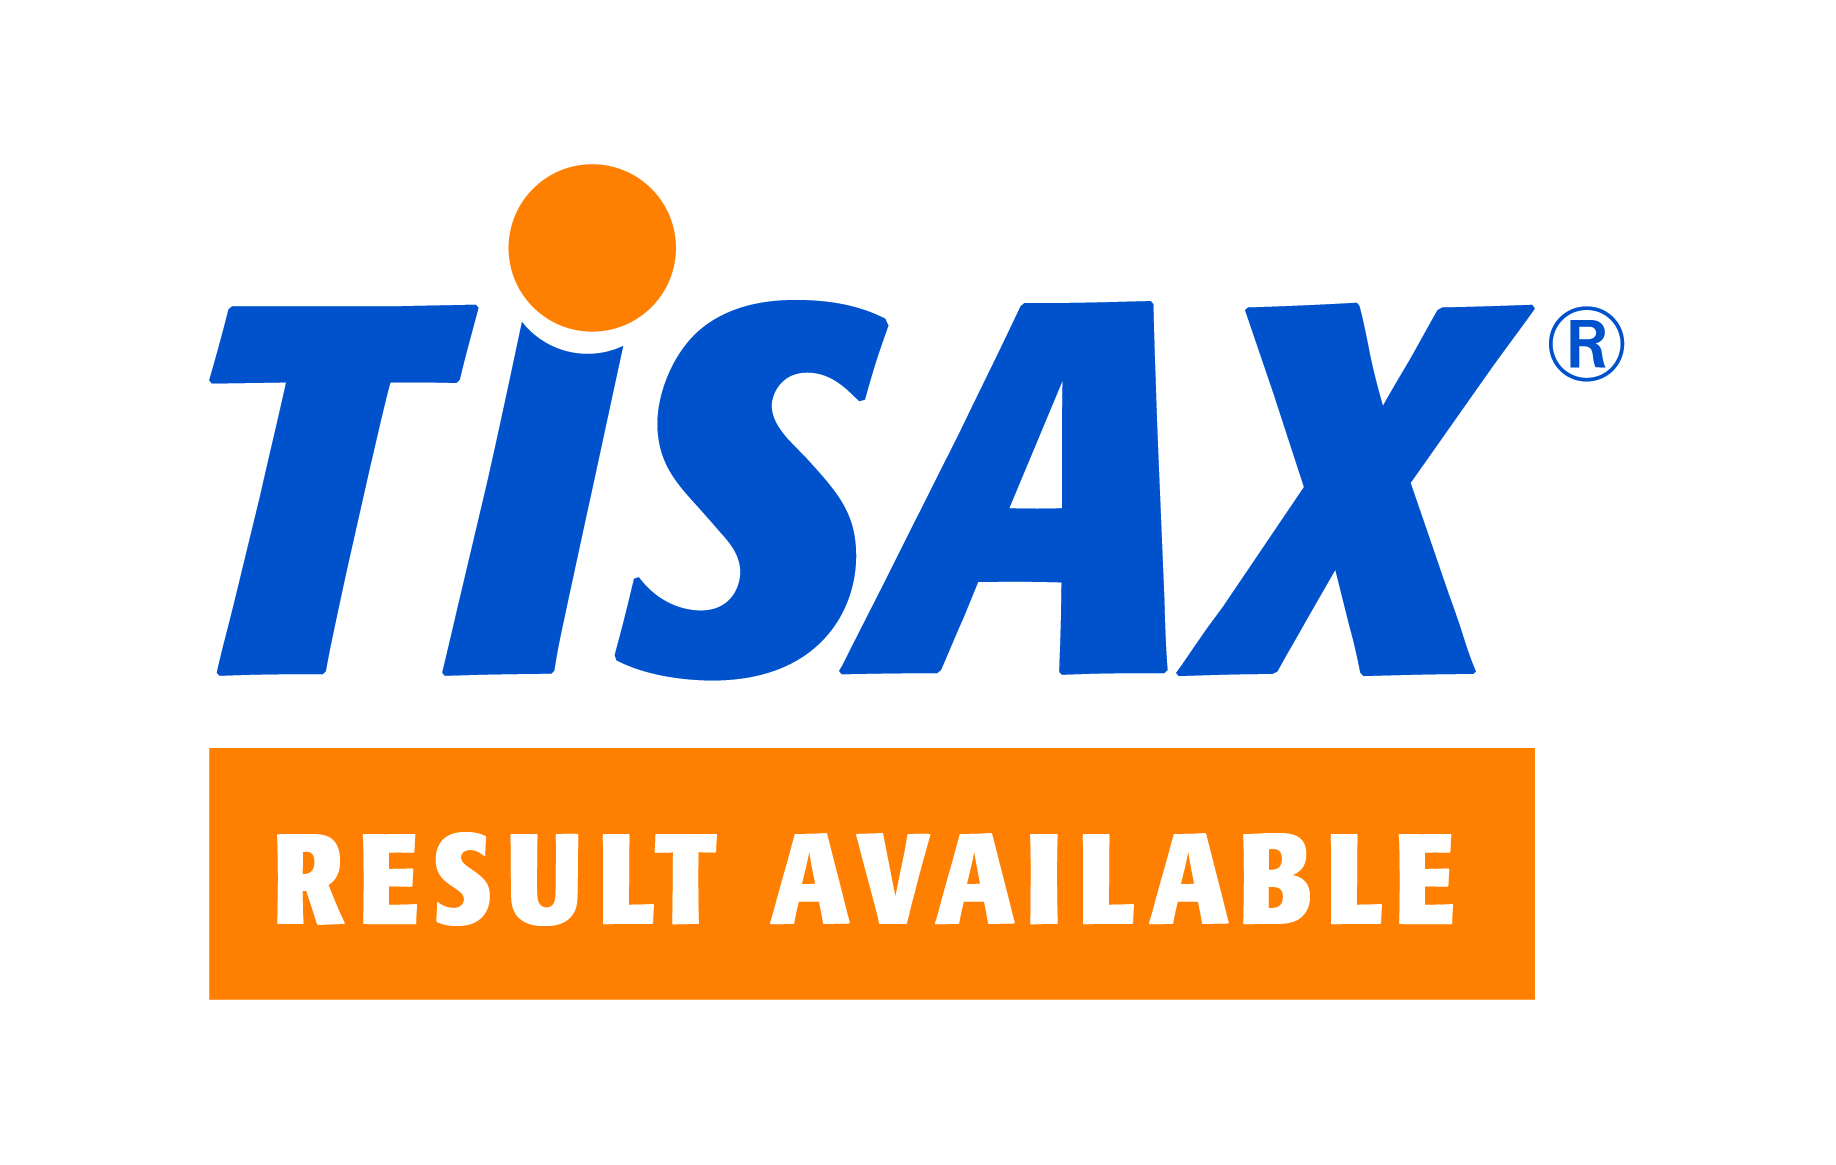 TISAX Result